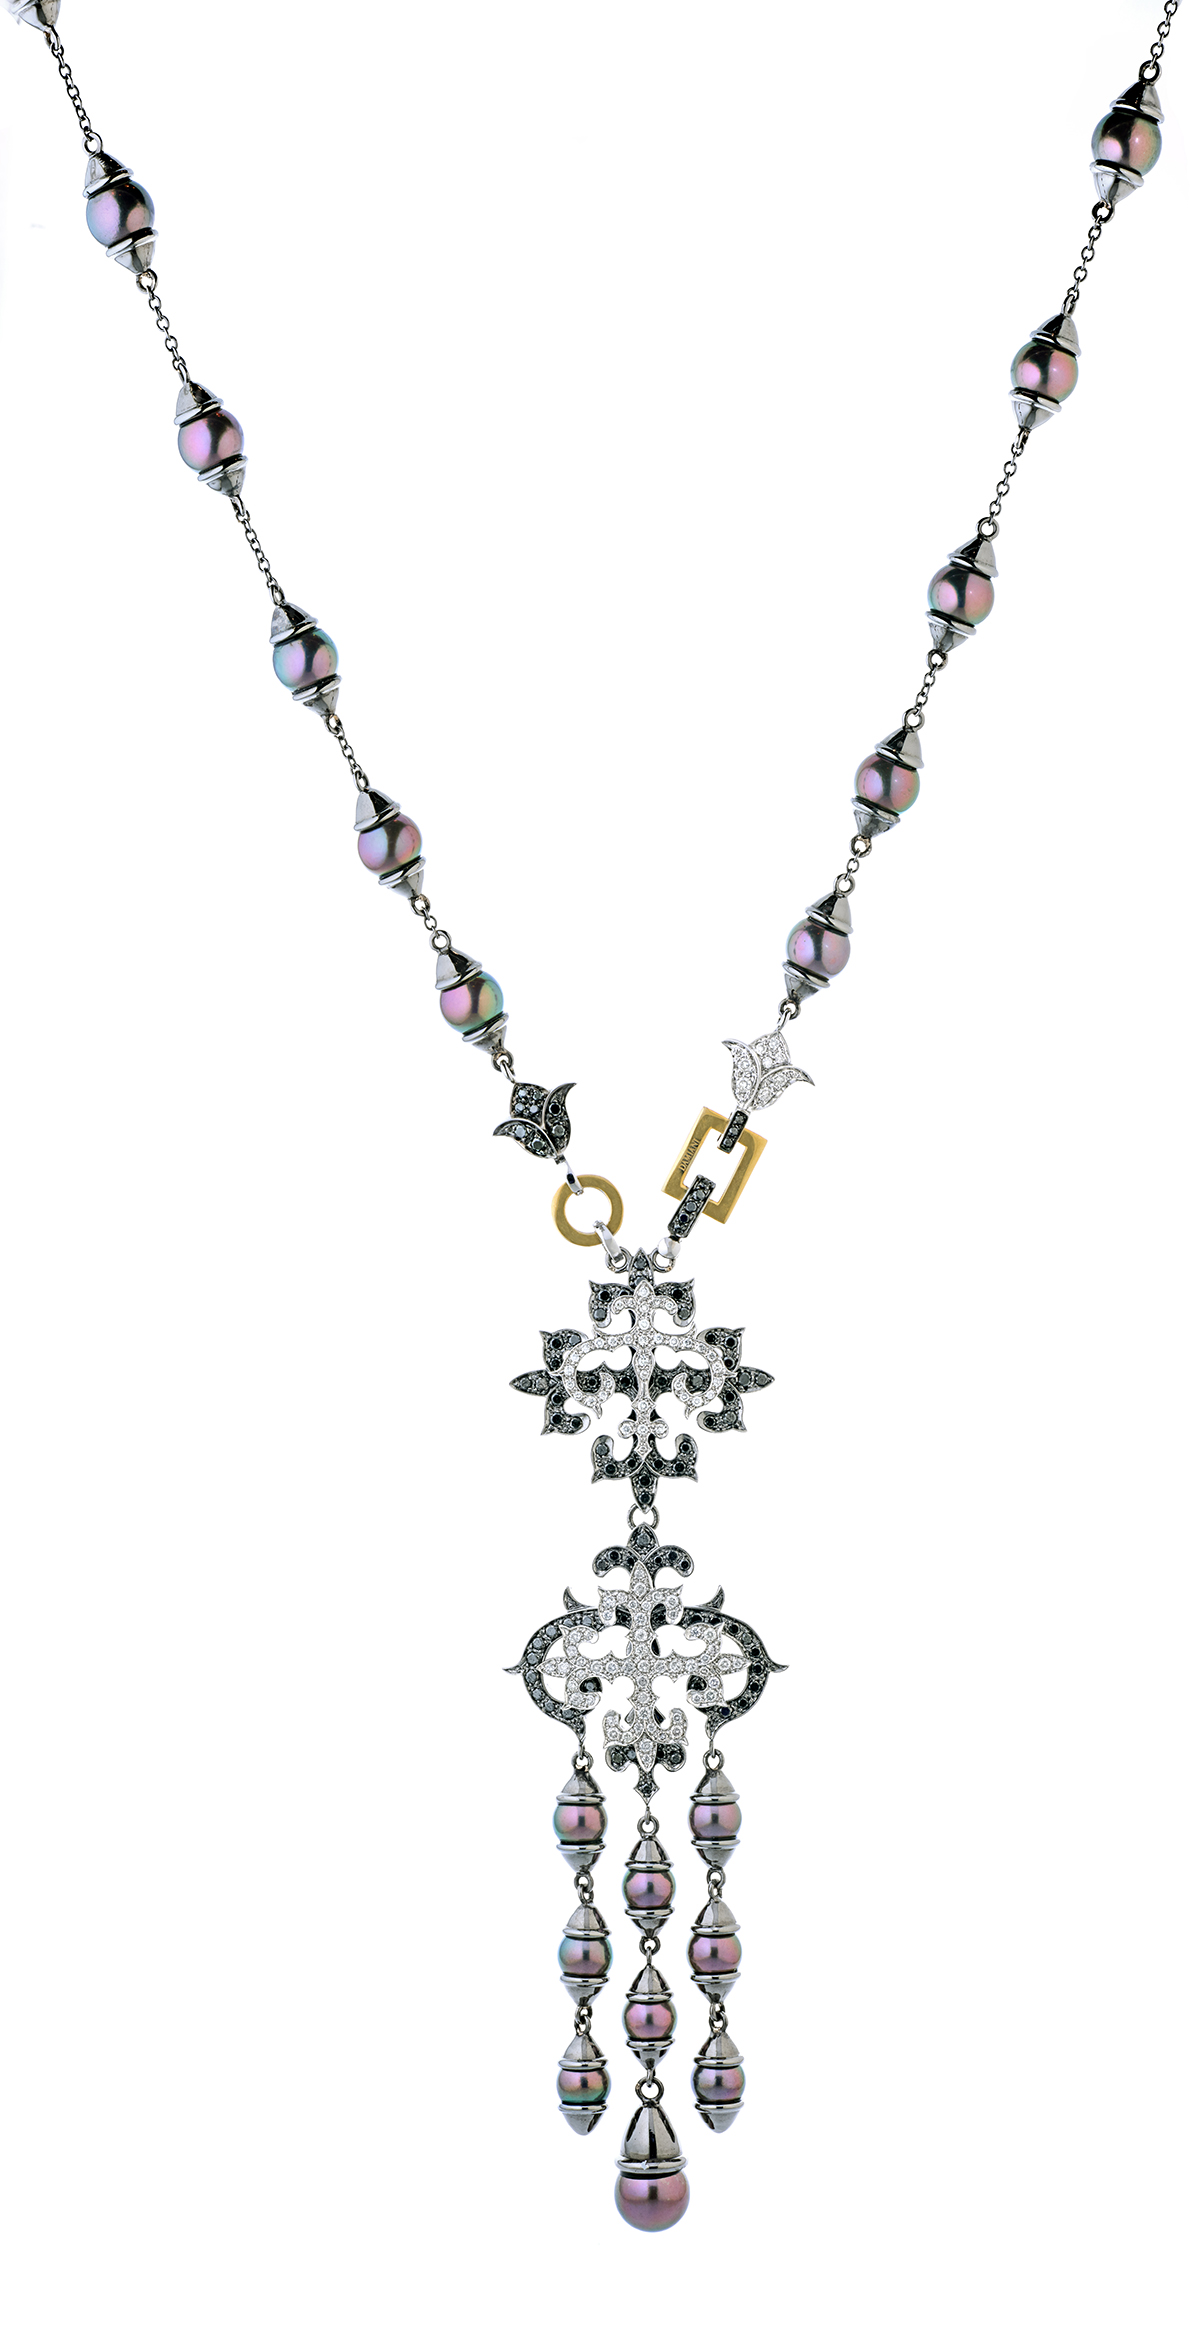 Ornate necklace by Italian brand Damiani